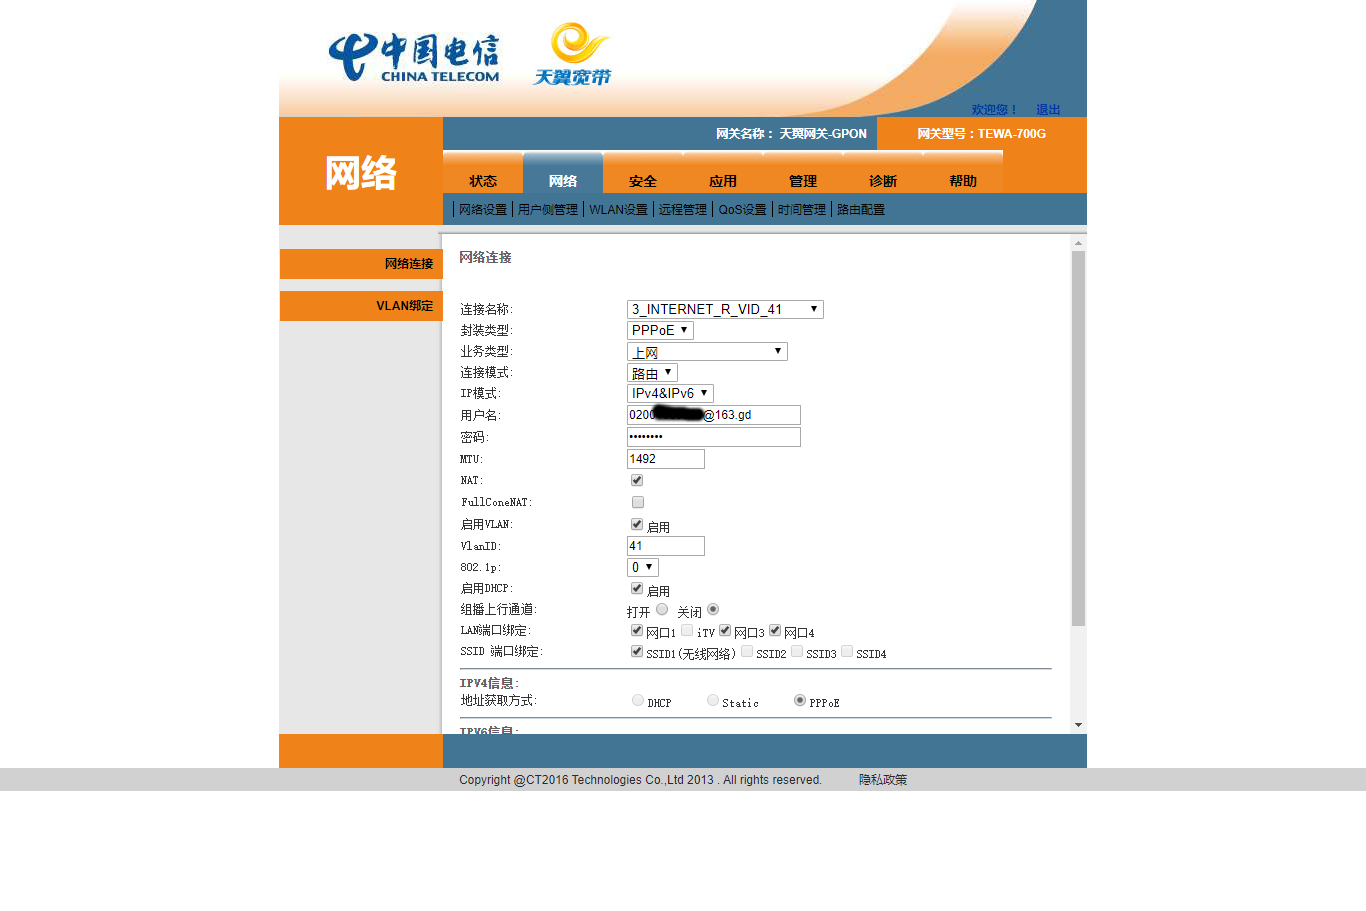 FireShot Capture 002 - 中国电信 - 192.168.1.1.png